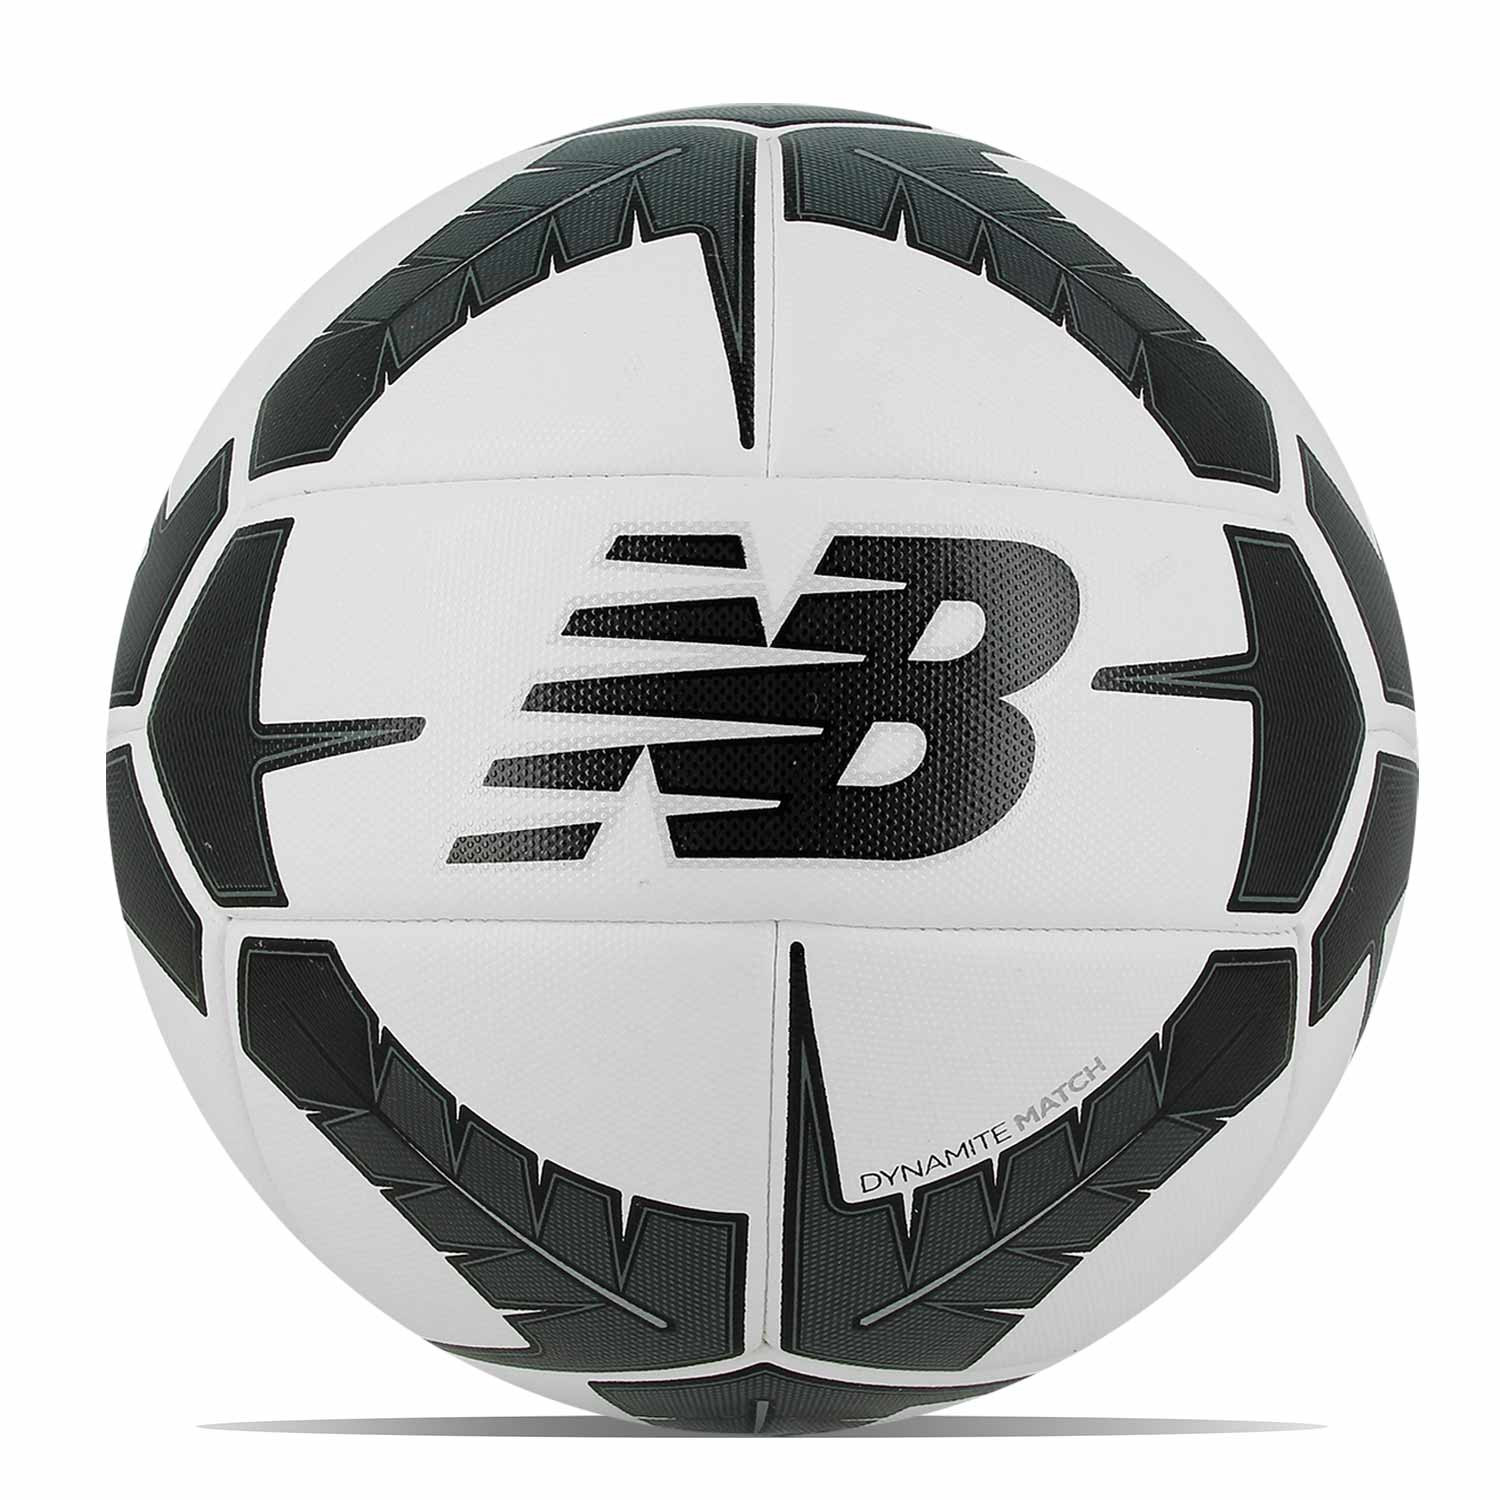 Balón New Balance Team Dynamite talla 5 blanco negro | futbolmania